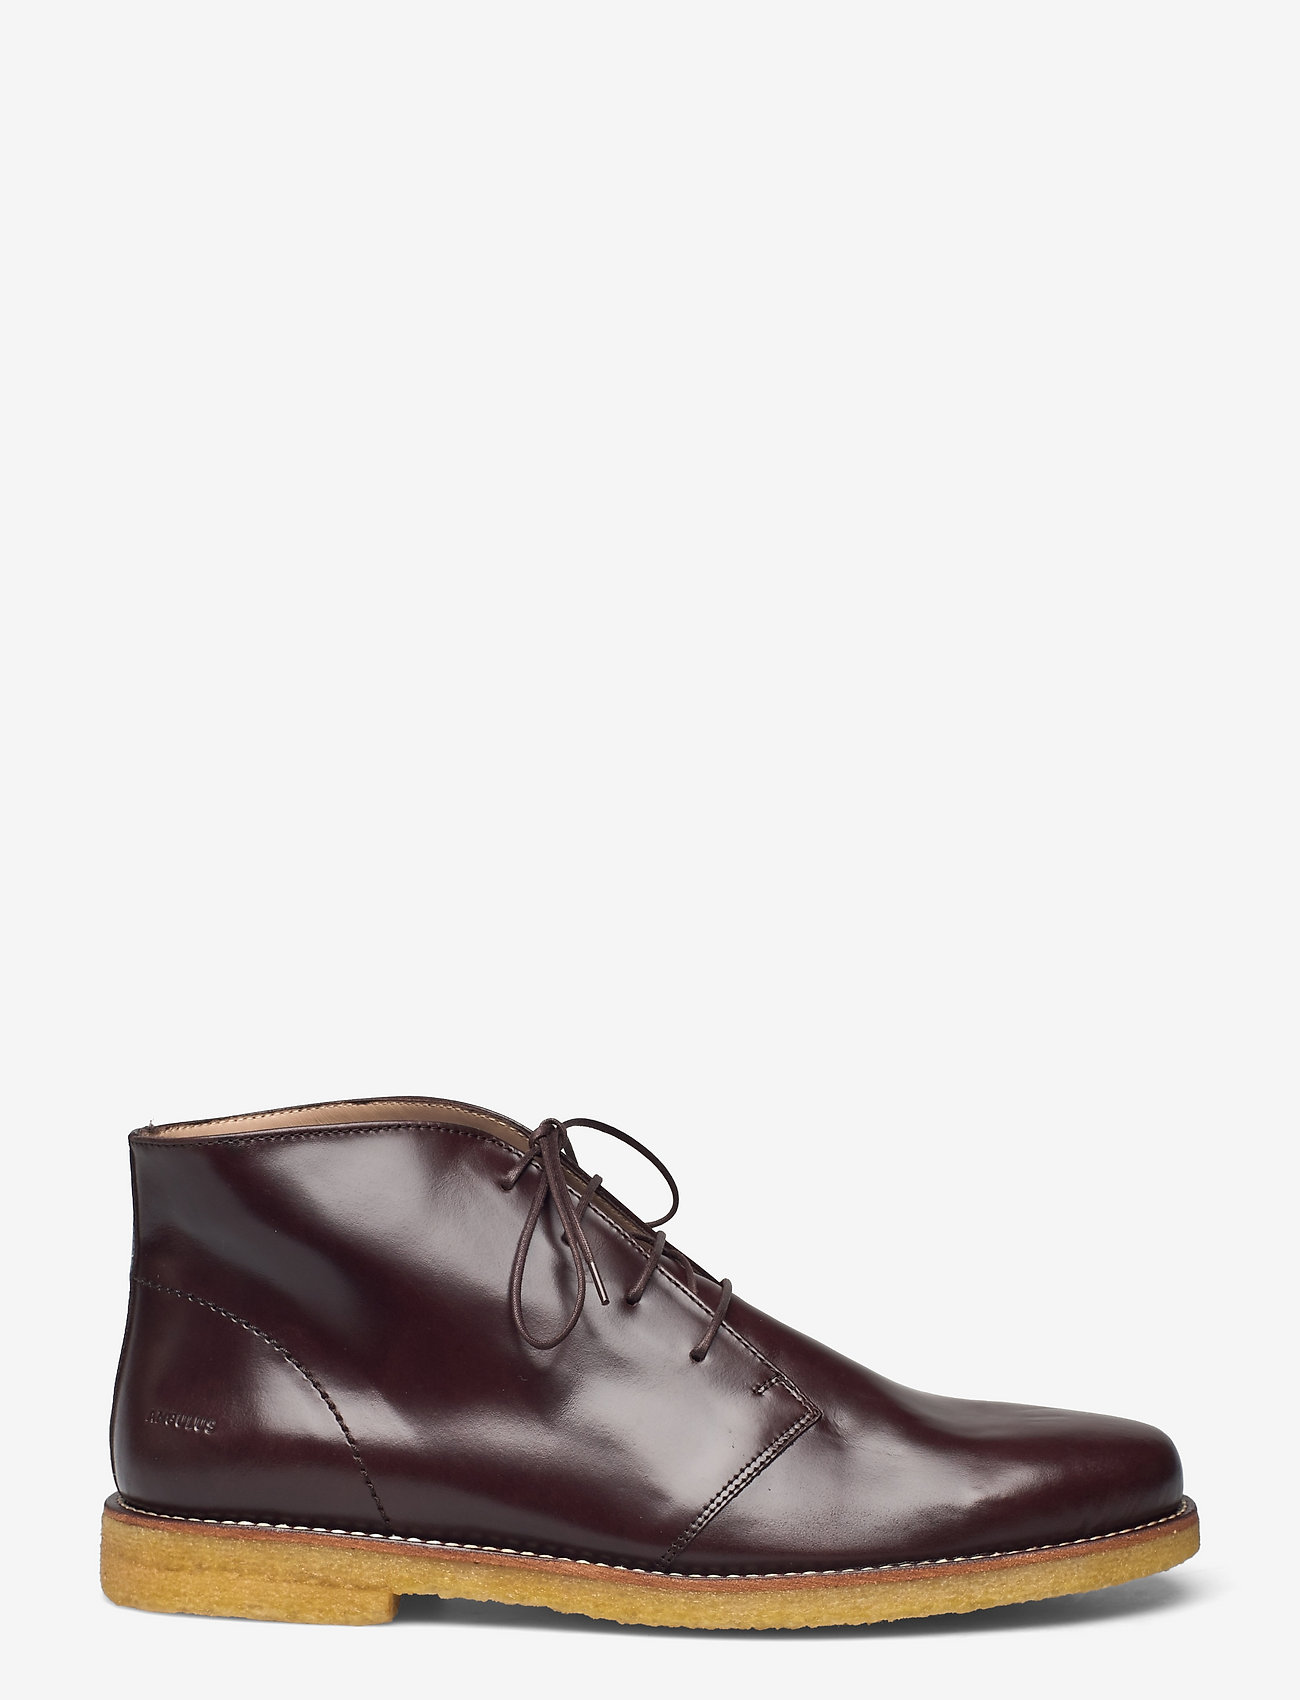 ANGULUS - Shoes - flat - desert boots - 1836 dark brown - 1